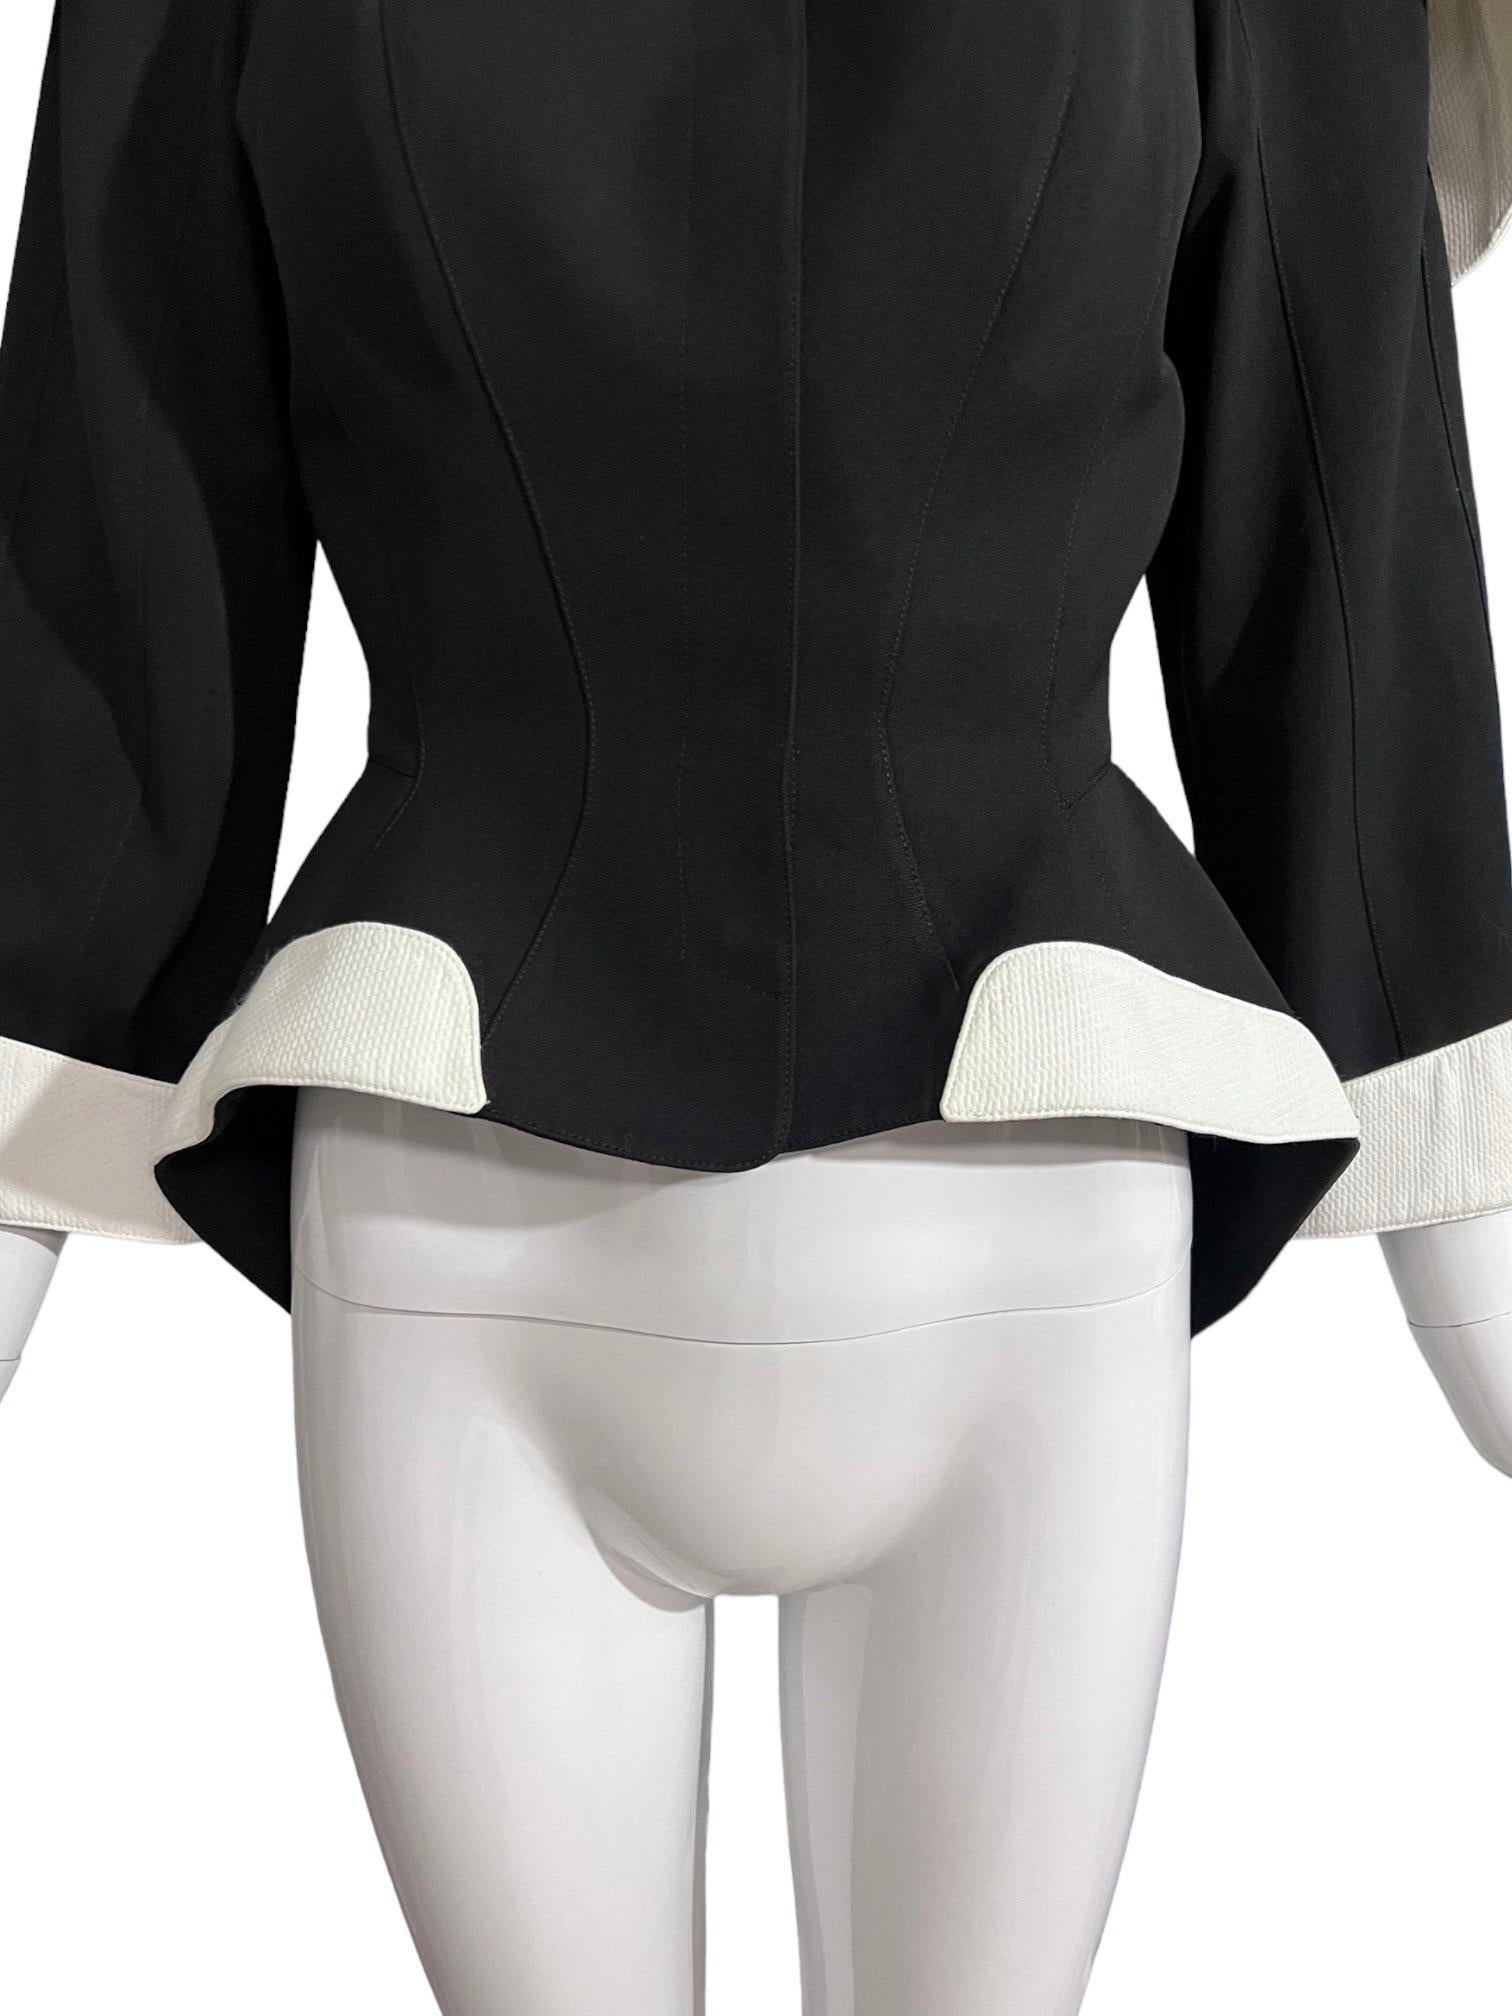 S/S 1996 Thierry Mugler Sculptural Runway Museum Skirt Suit Ensemble For Sale 8